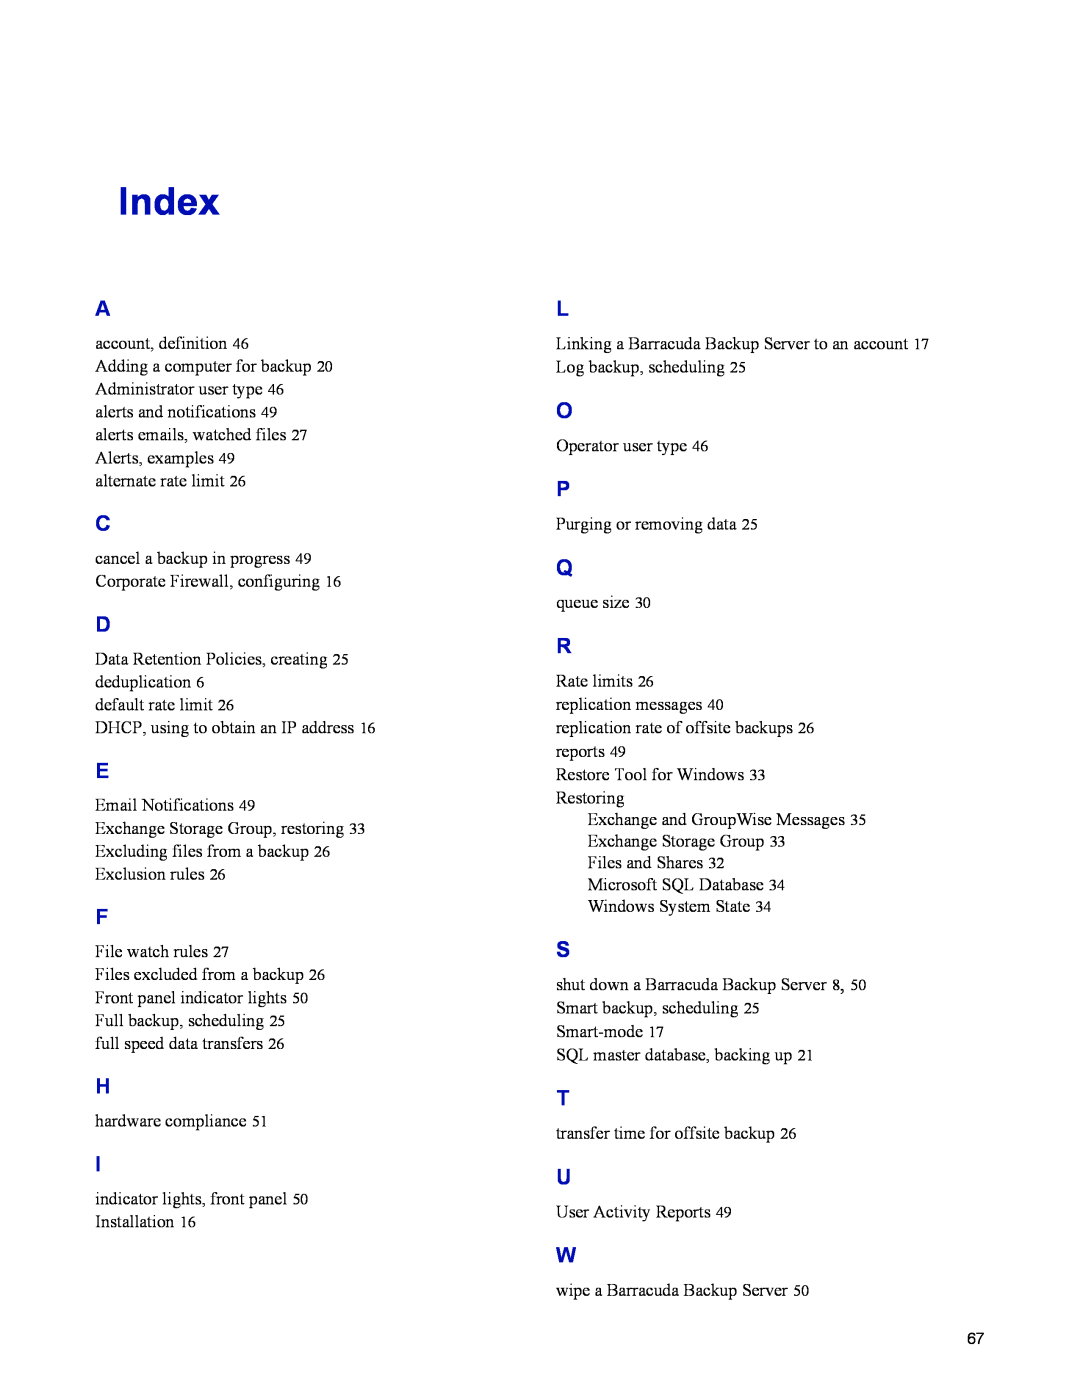 Barracuda Networks 4 manual Index 